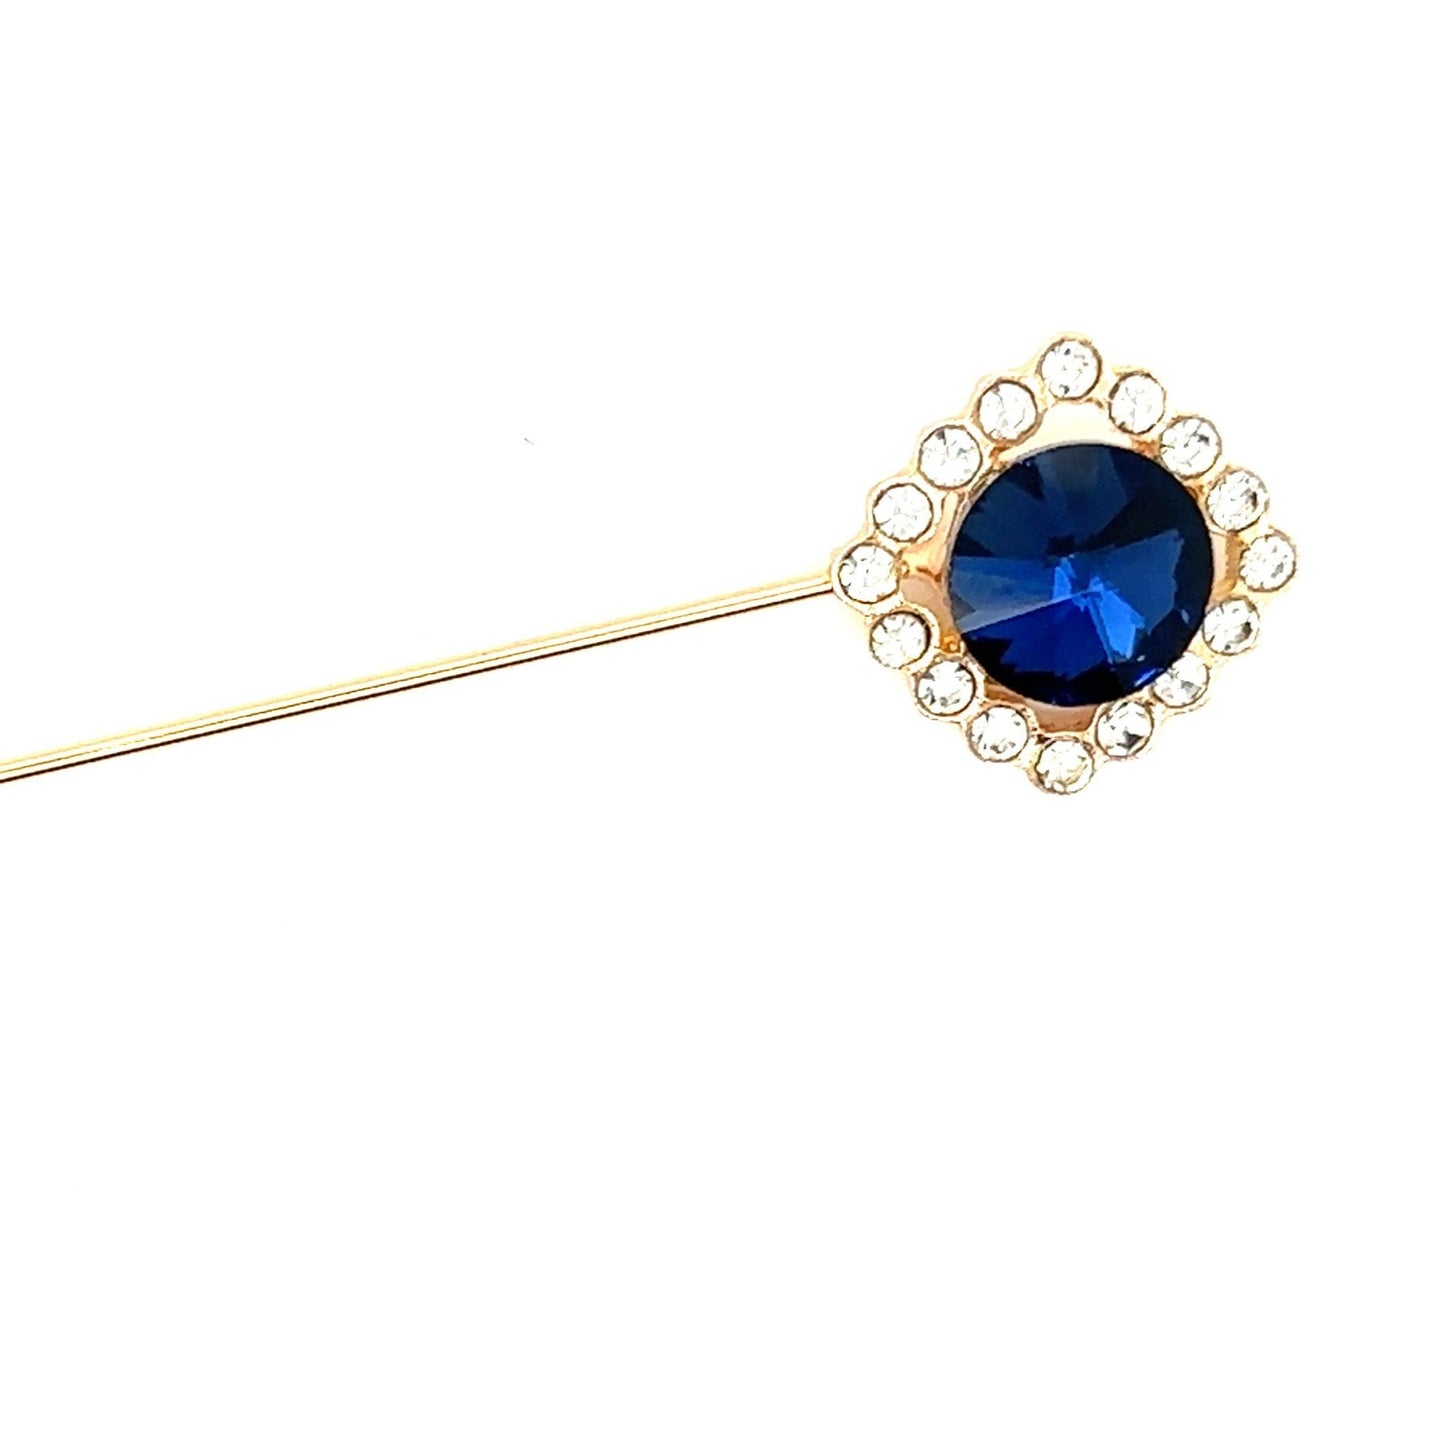 Something Blue Rhinestone Pin Gold Lapel Pin